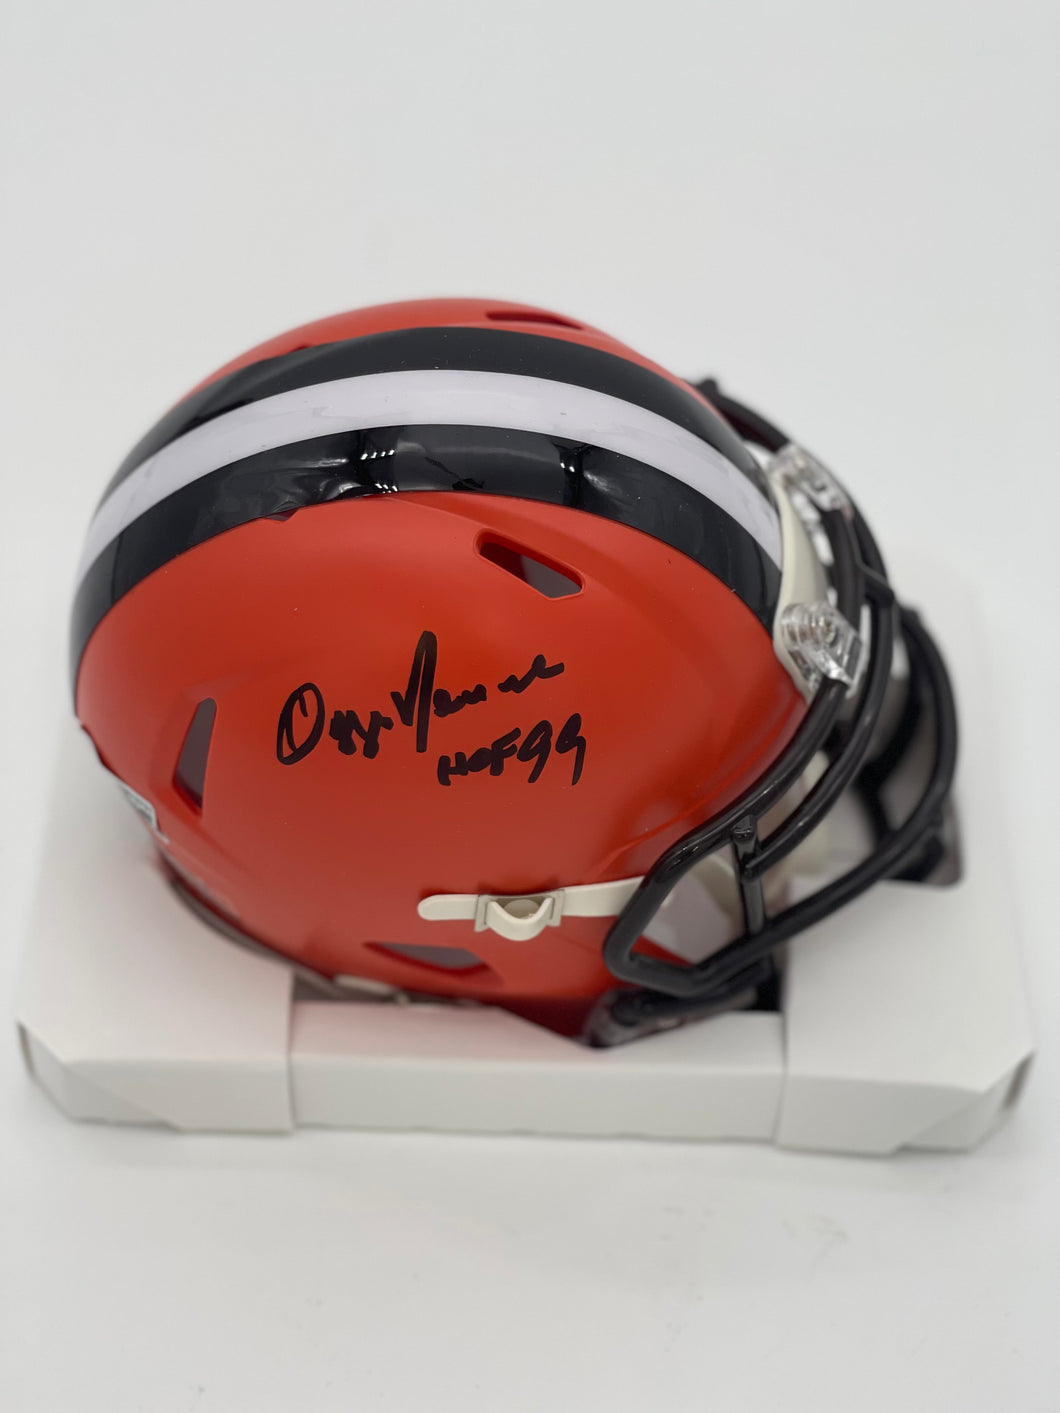 Ozzie Newsome signed mini helmet